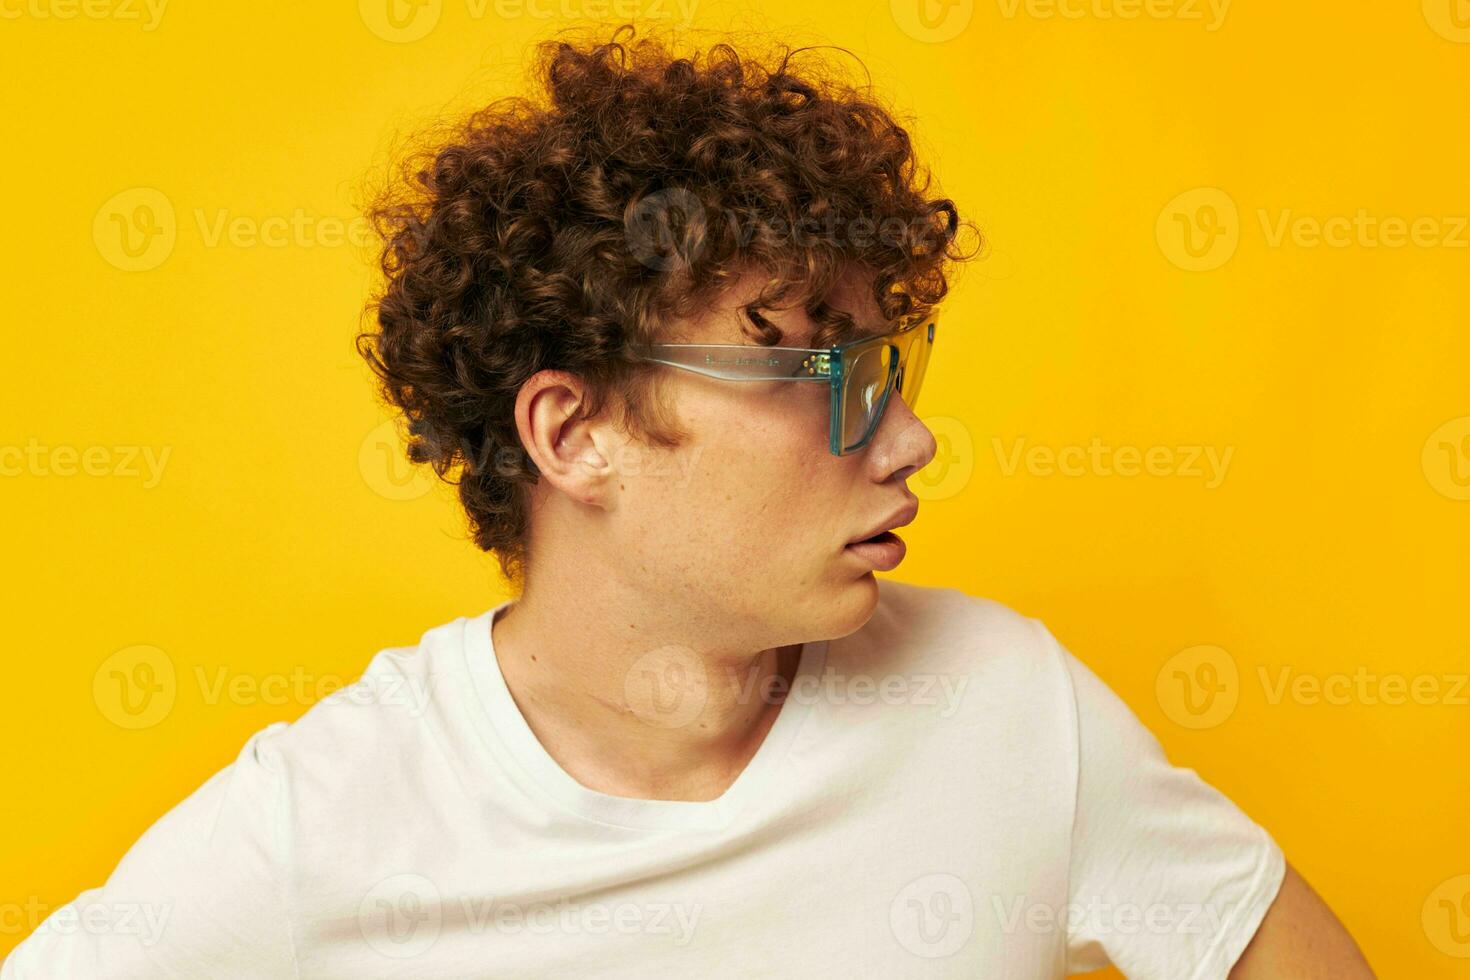 linda Pelirrojo chico en azul lentes blanco camiseta Moda moderno estilo amarillo antecedentes inalterado foto